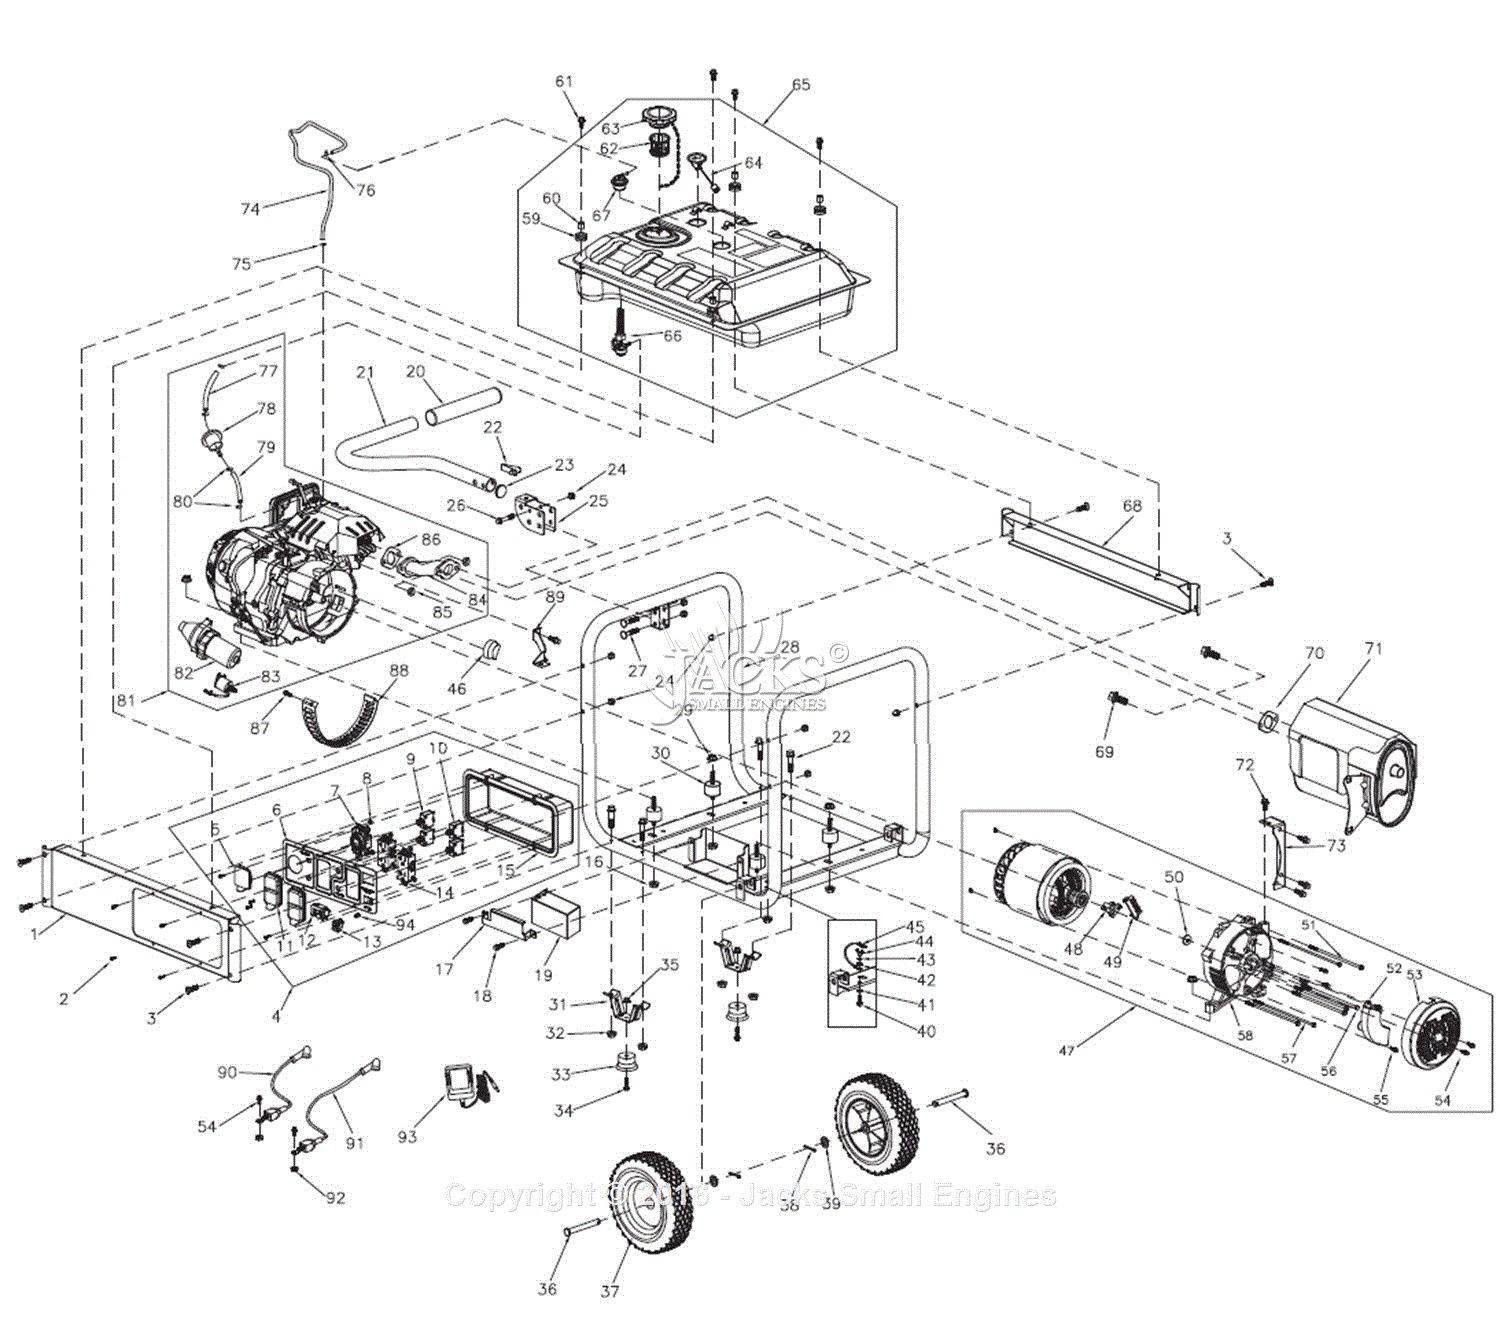 Honda Small Engine Parts Diagram Generac Gp6500e Parts Diagrams Of Honda Small Engine Parts Diagram